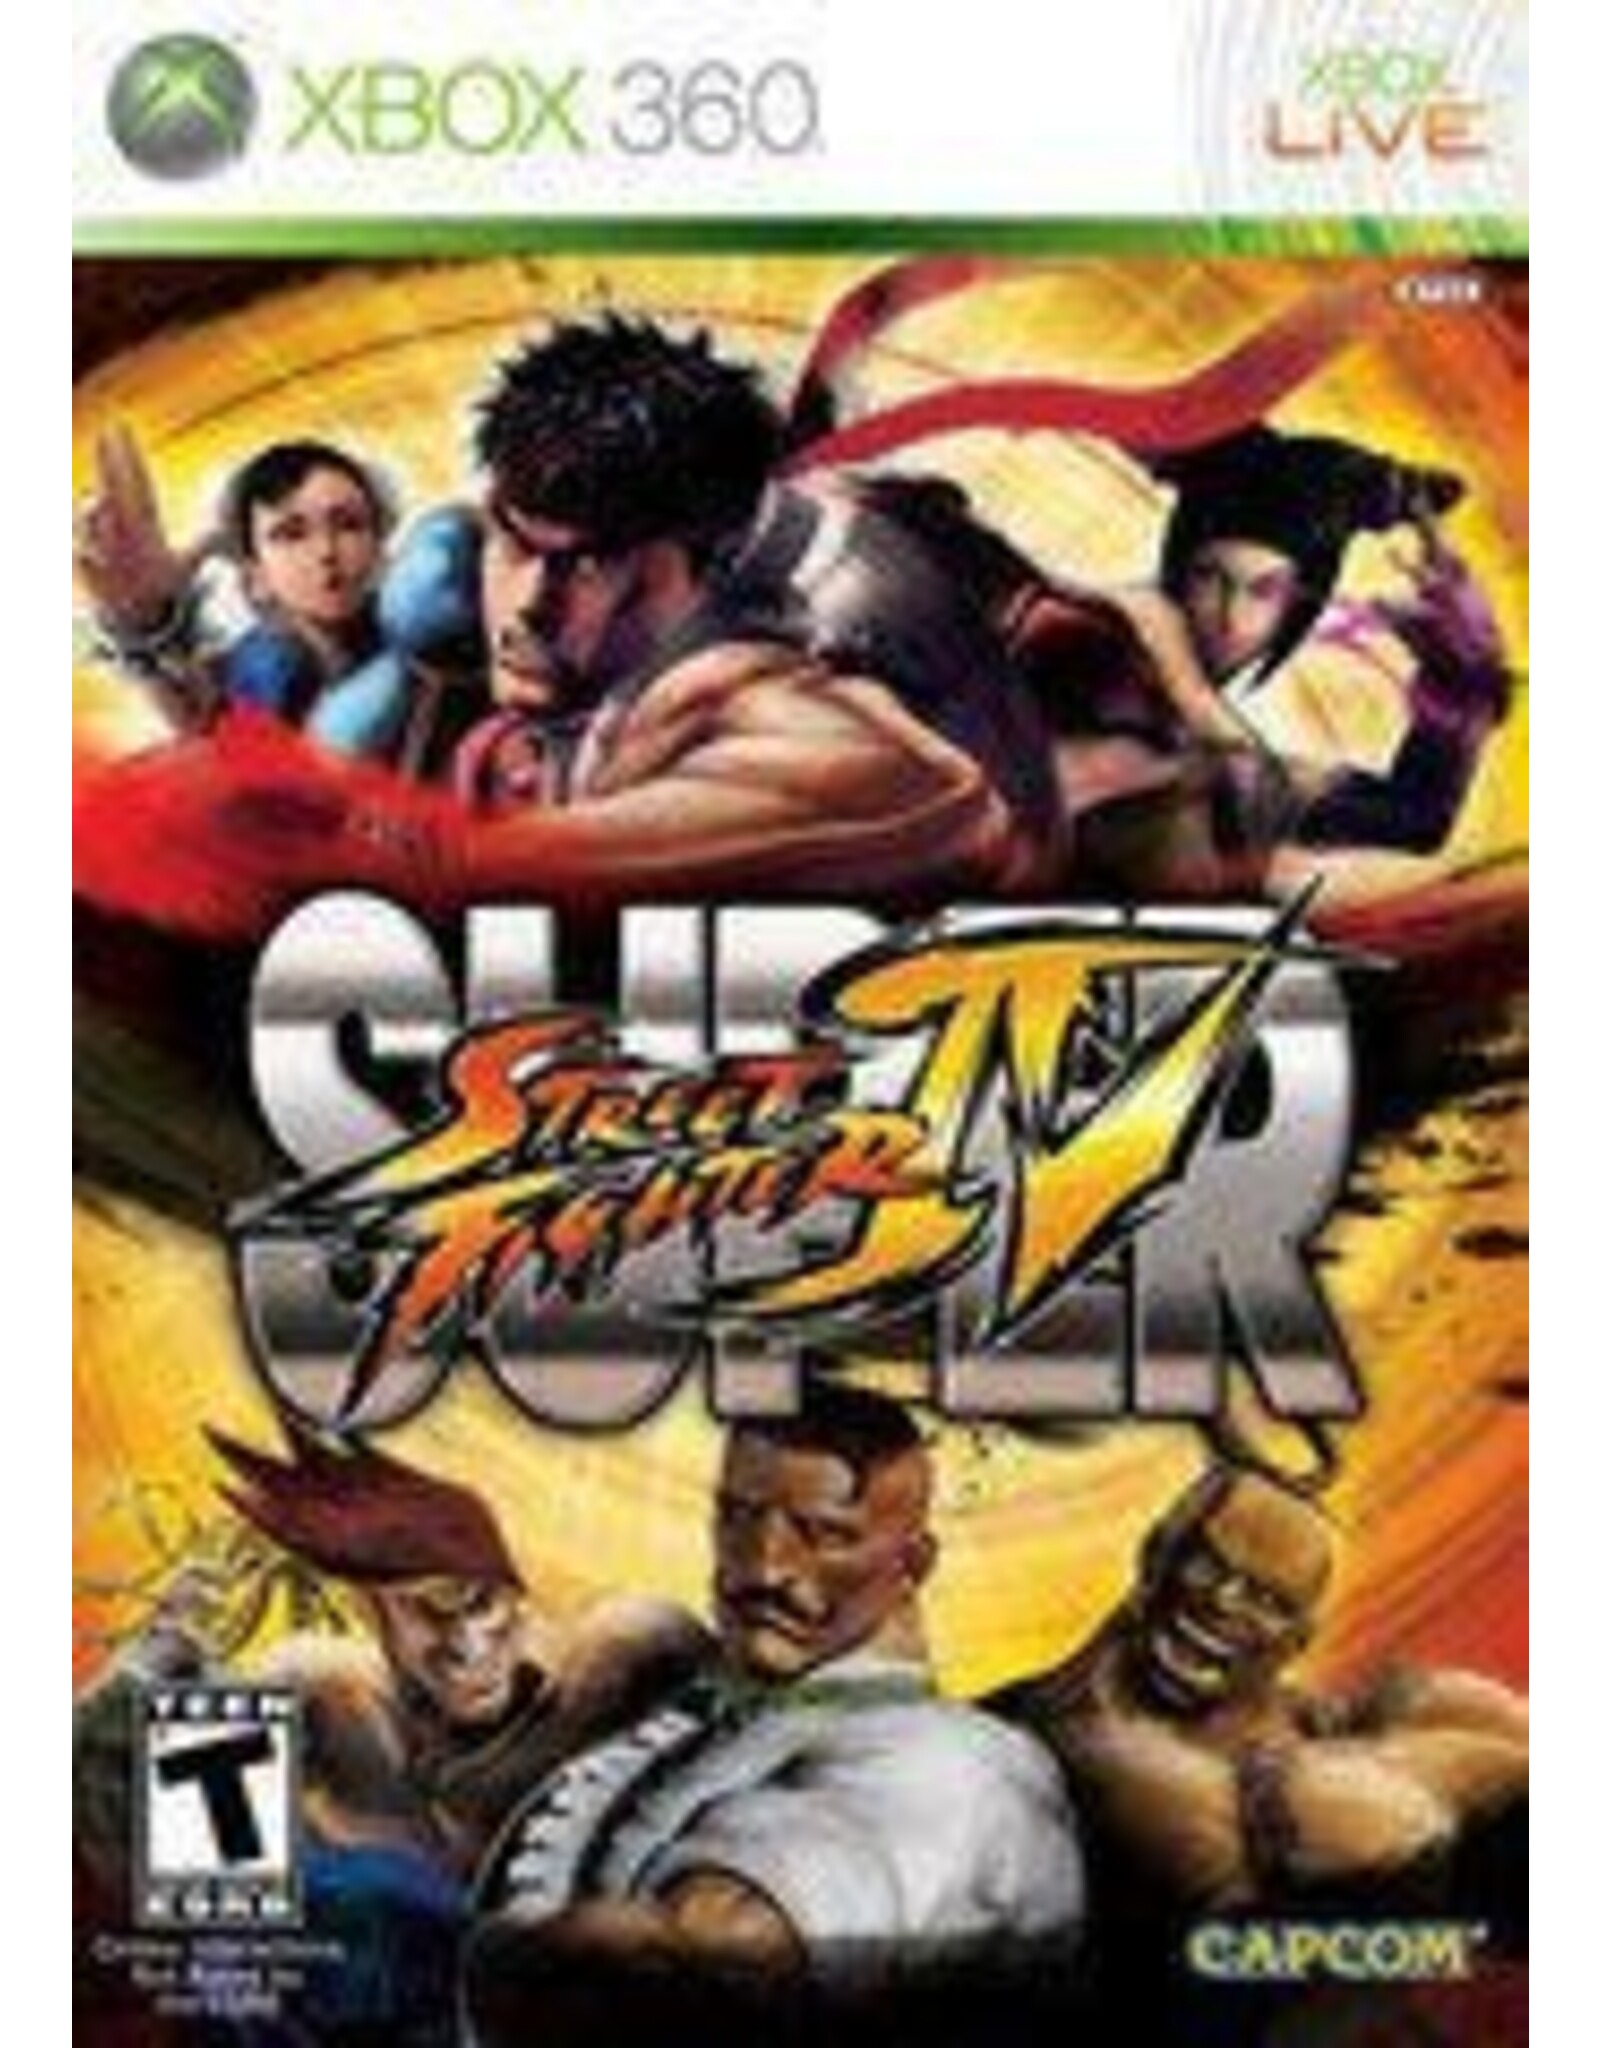 Xbox 360 Super Street Fighter IV (CiB, Damaged Sleeve)